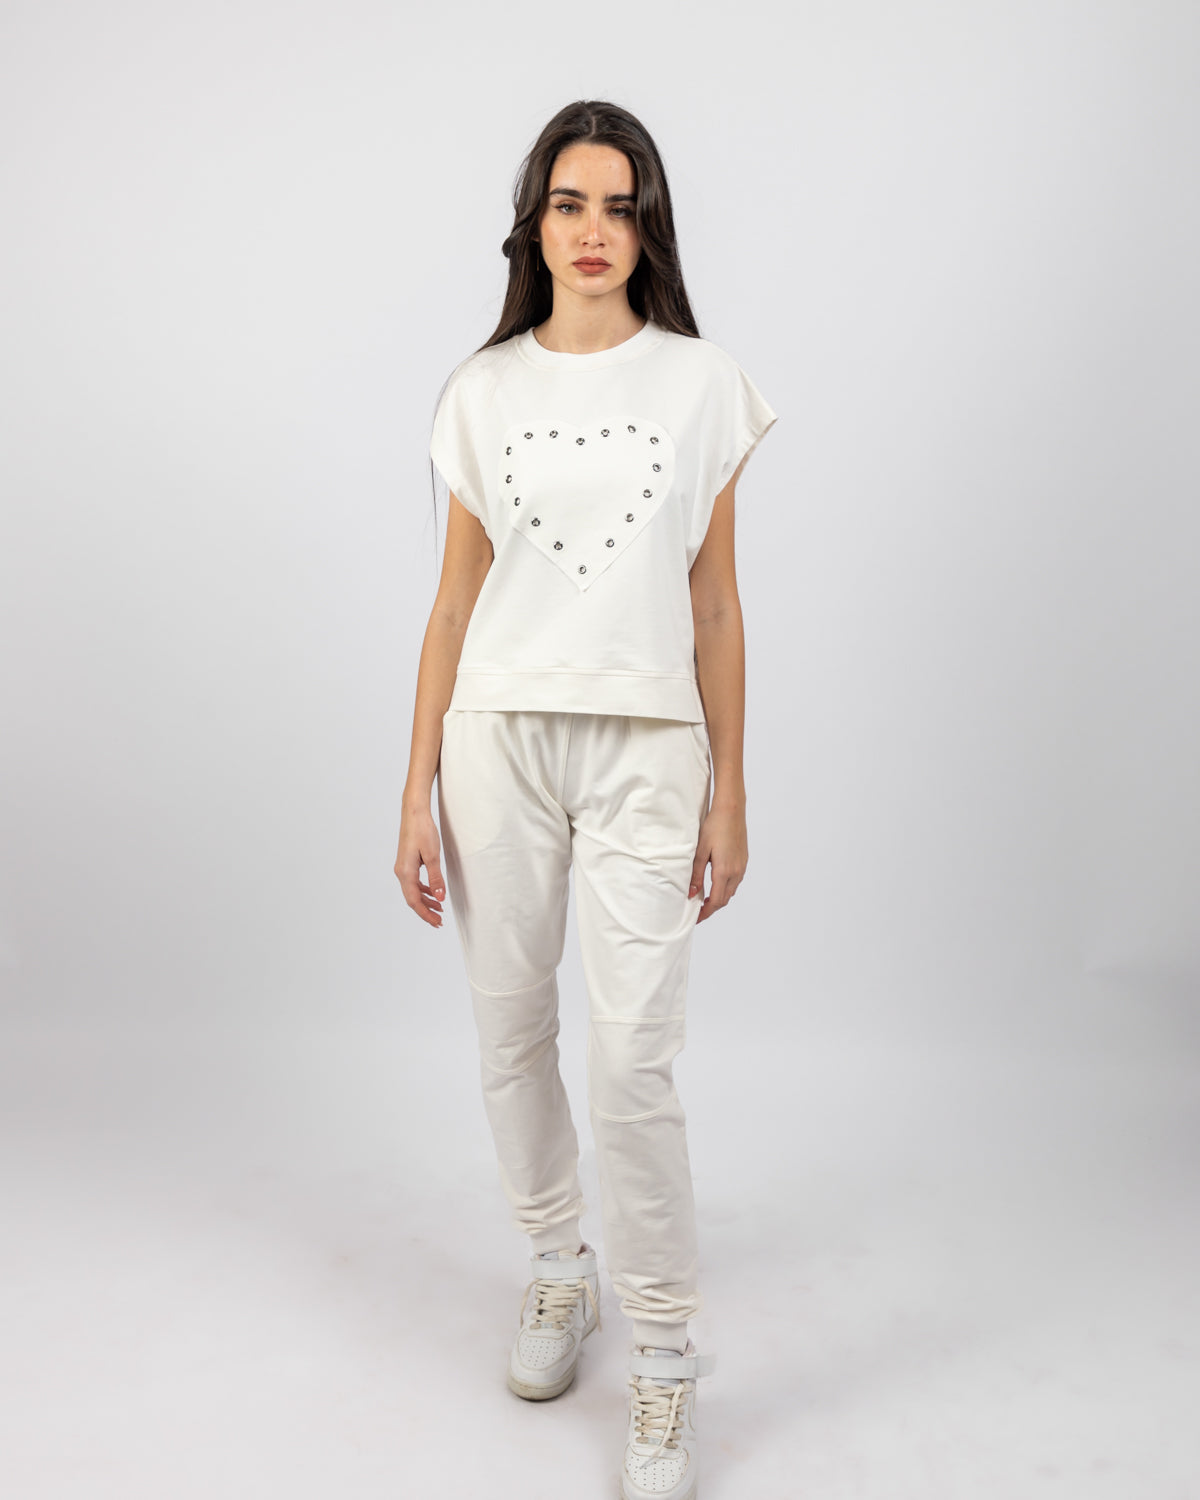 Heart Sweatshirt With Studs For Women - White